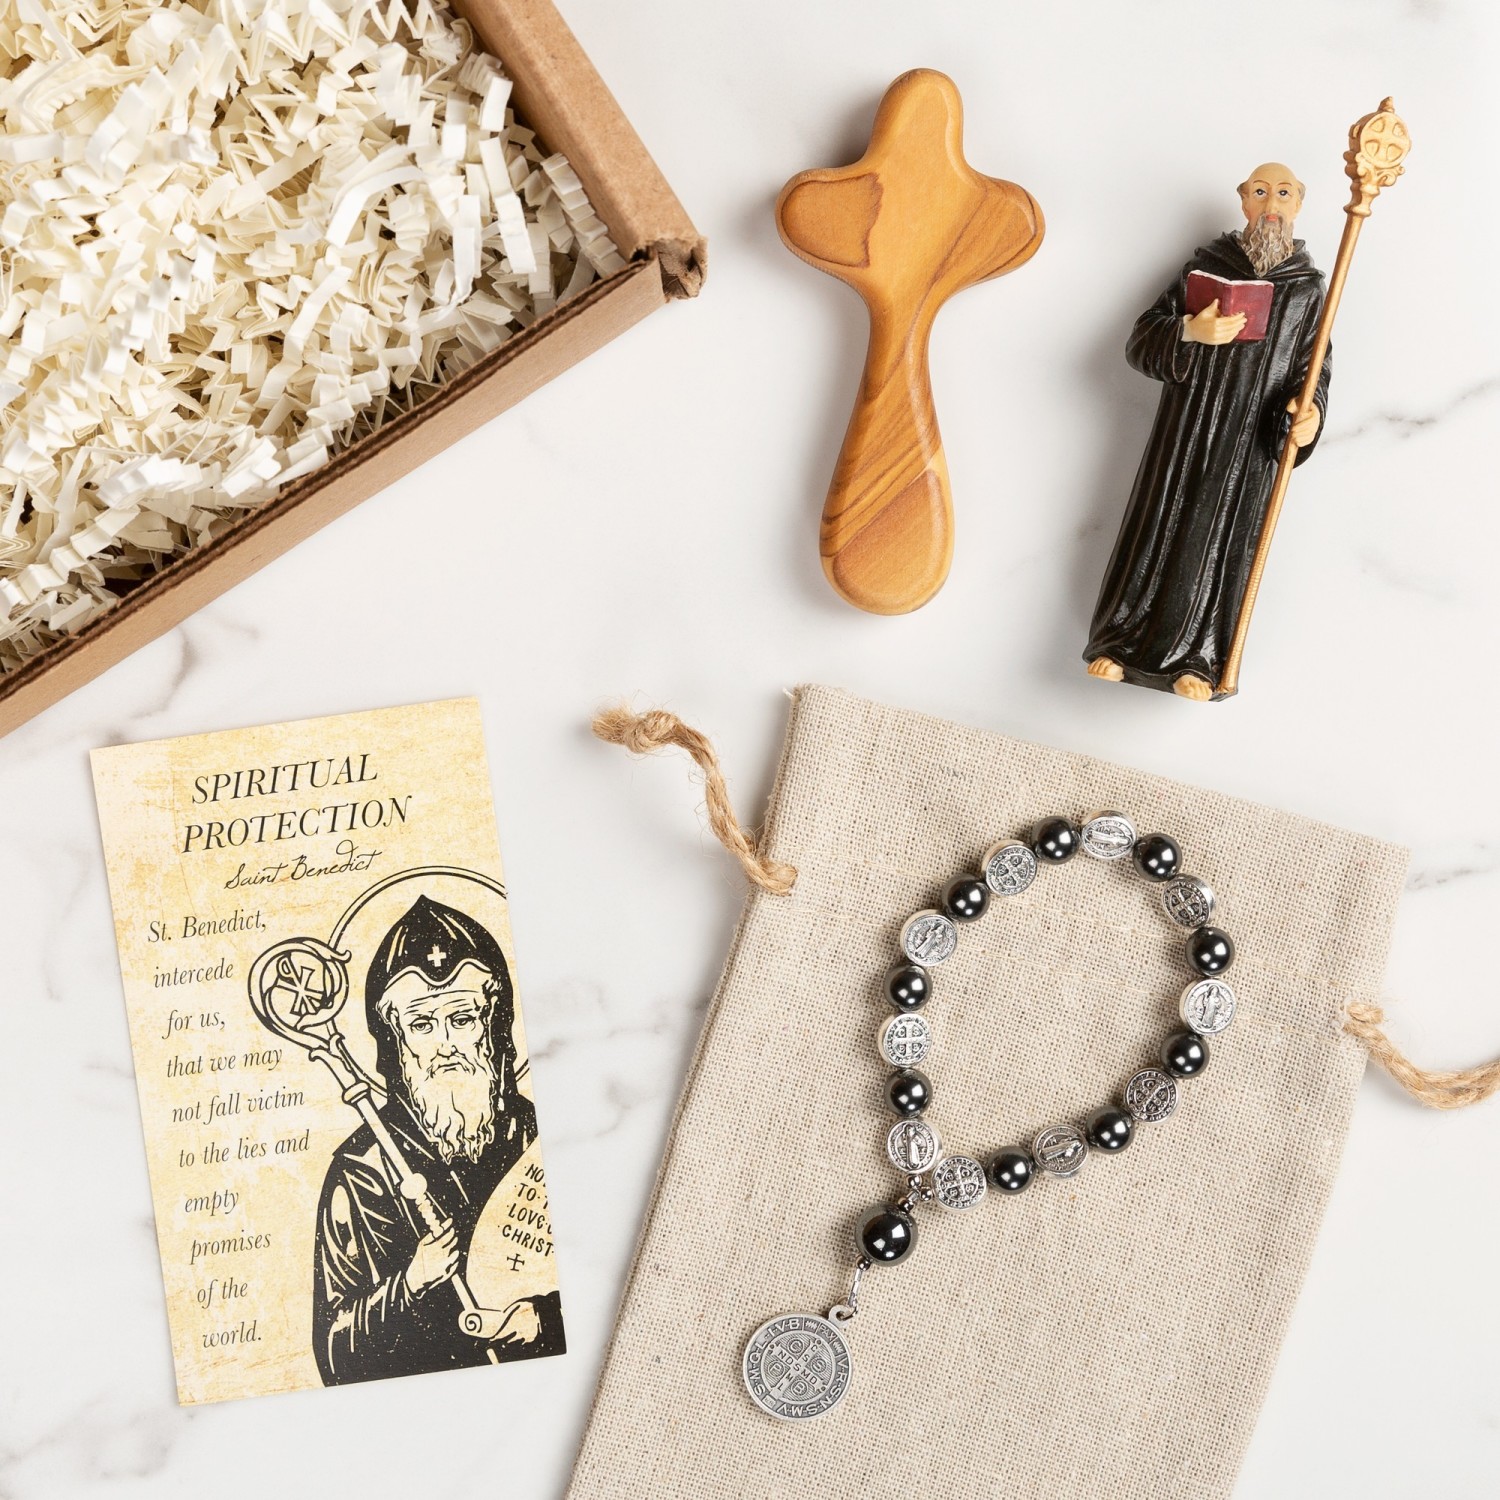 His and Hers Companion Saint Benedict Bracelet Set - Catholic Jewelry – My  Saint My Hero